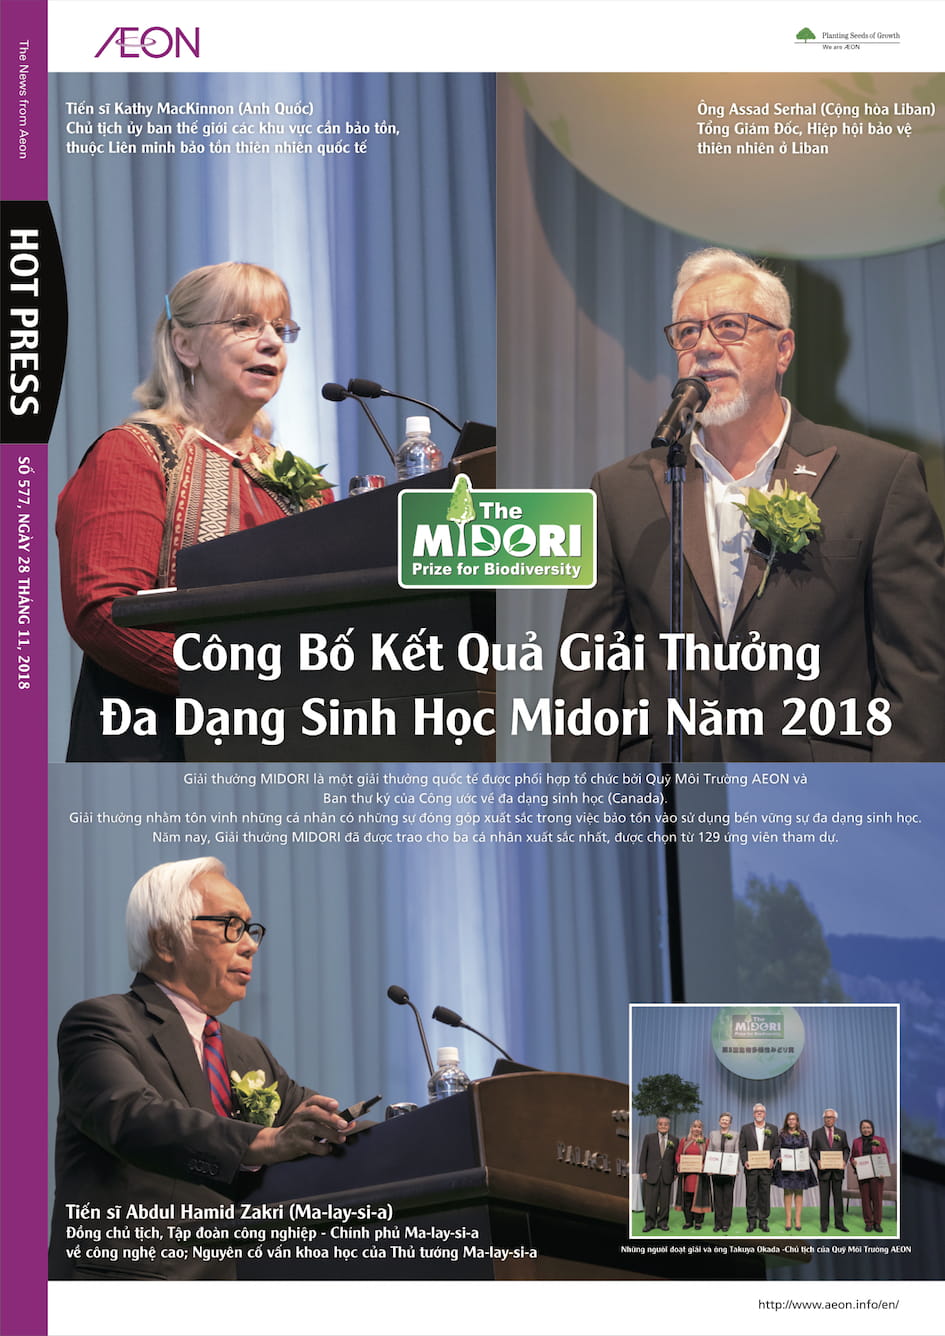 Kết Quả Giải Thưởng Đa Dạng Sinh Học Midori 2018